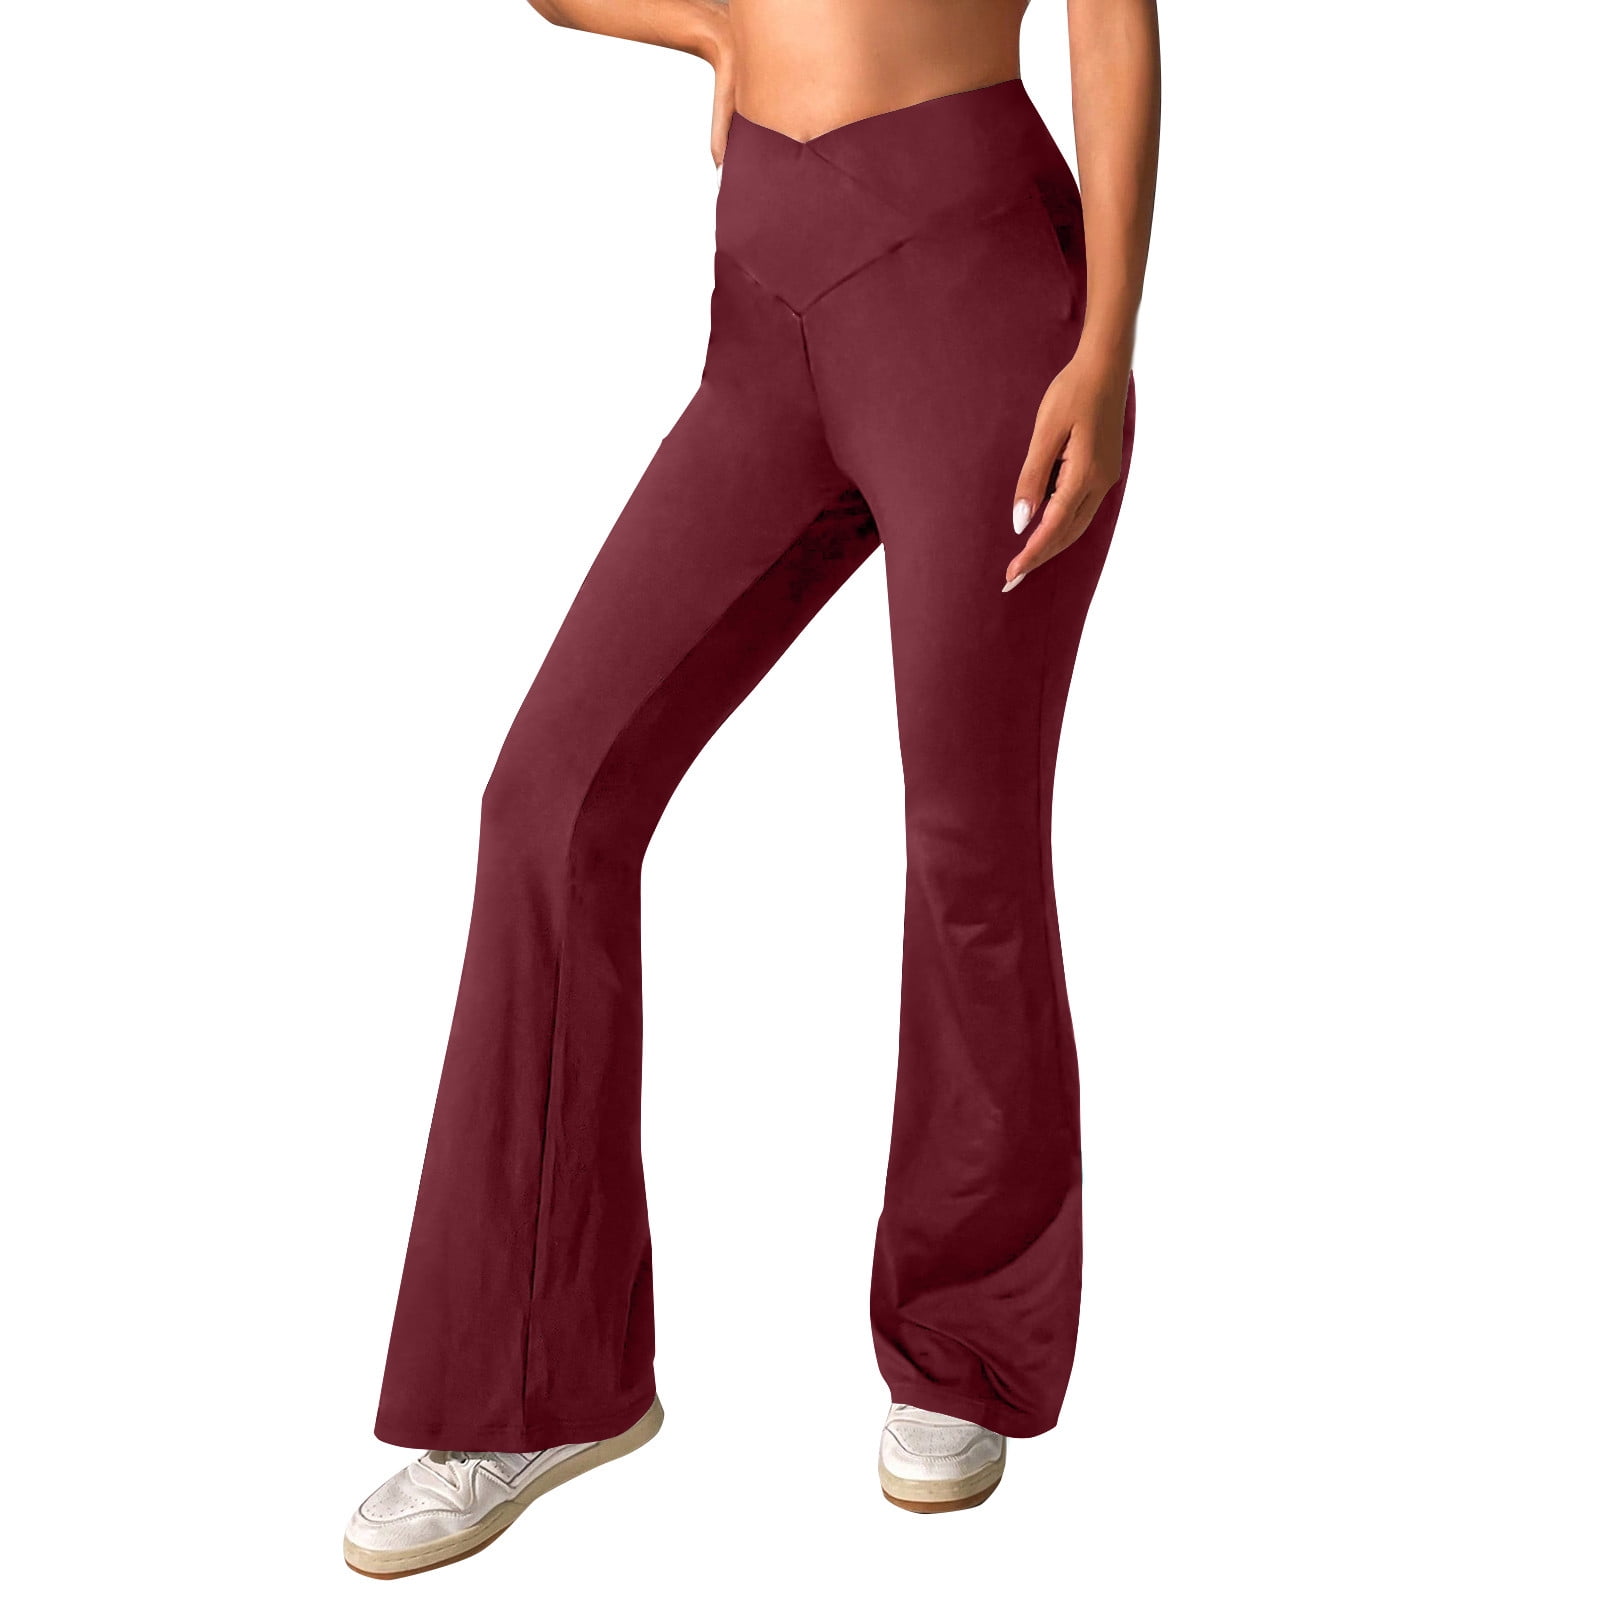  Aopwsrlyi Women's Bootcut Yoga Pants Leggings High Waisted  Tummy Control Yoga Flare Pants(S,Black) : Clothing, Shoes & Jewelry